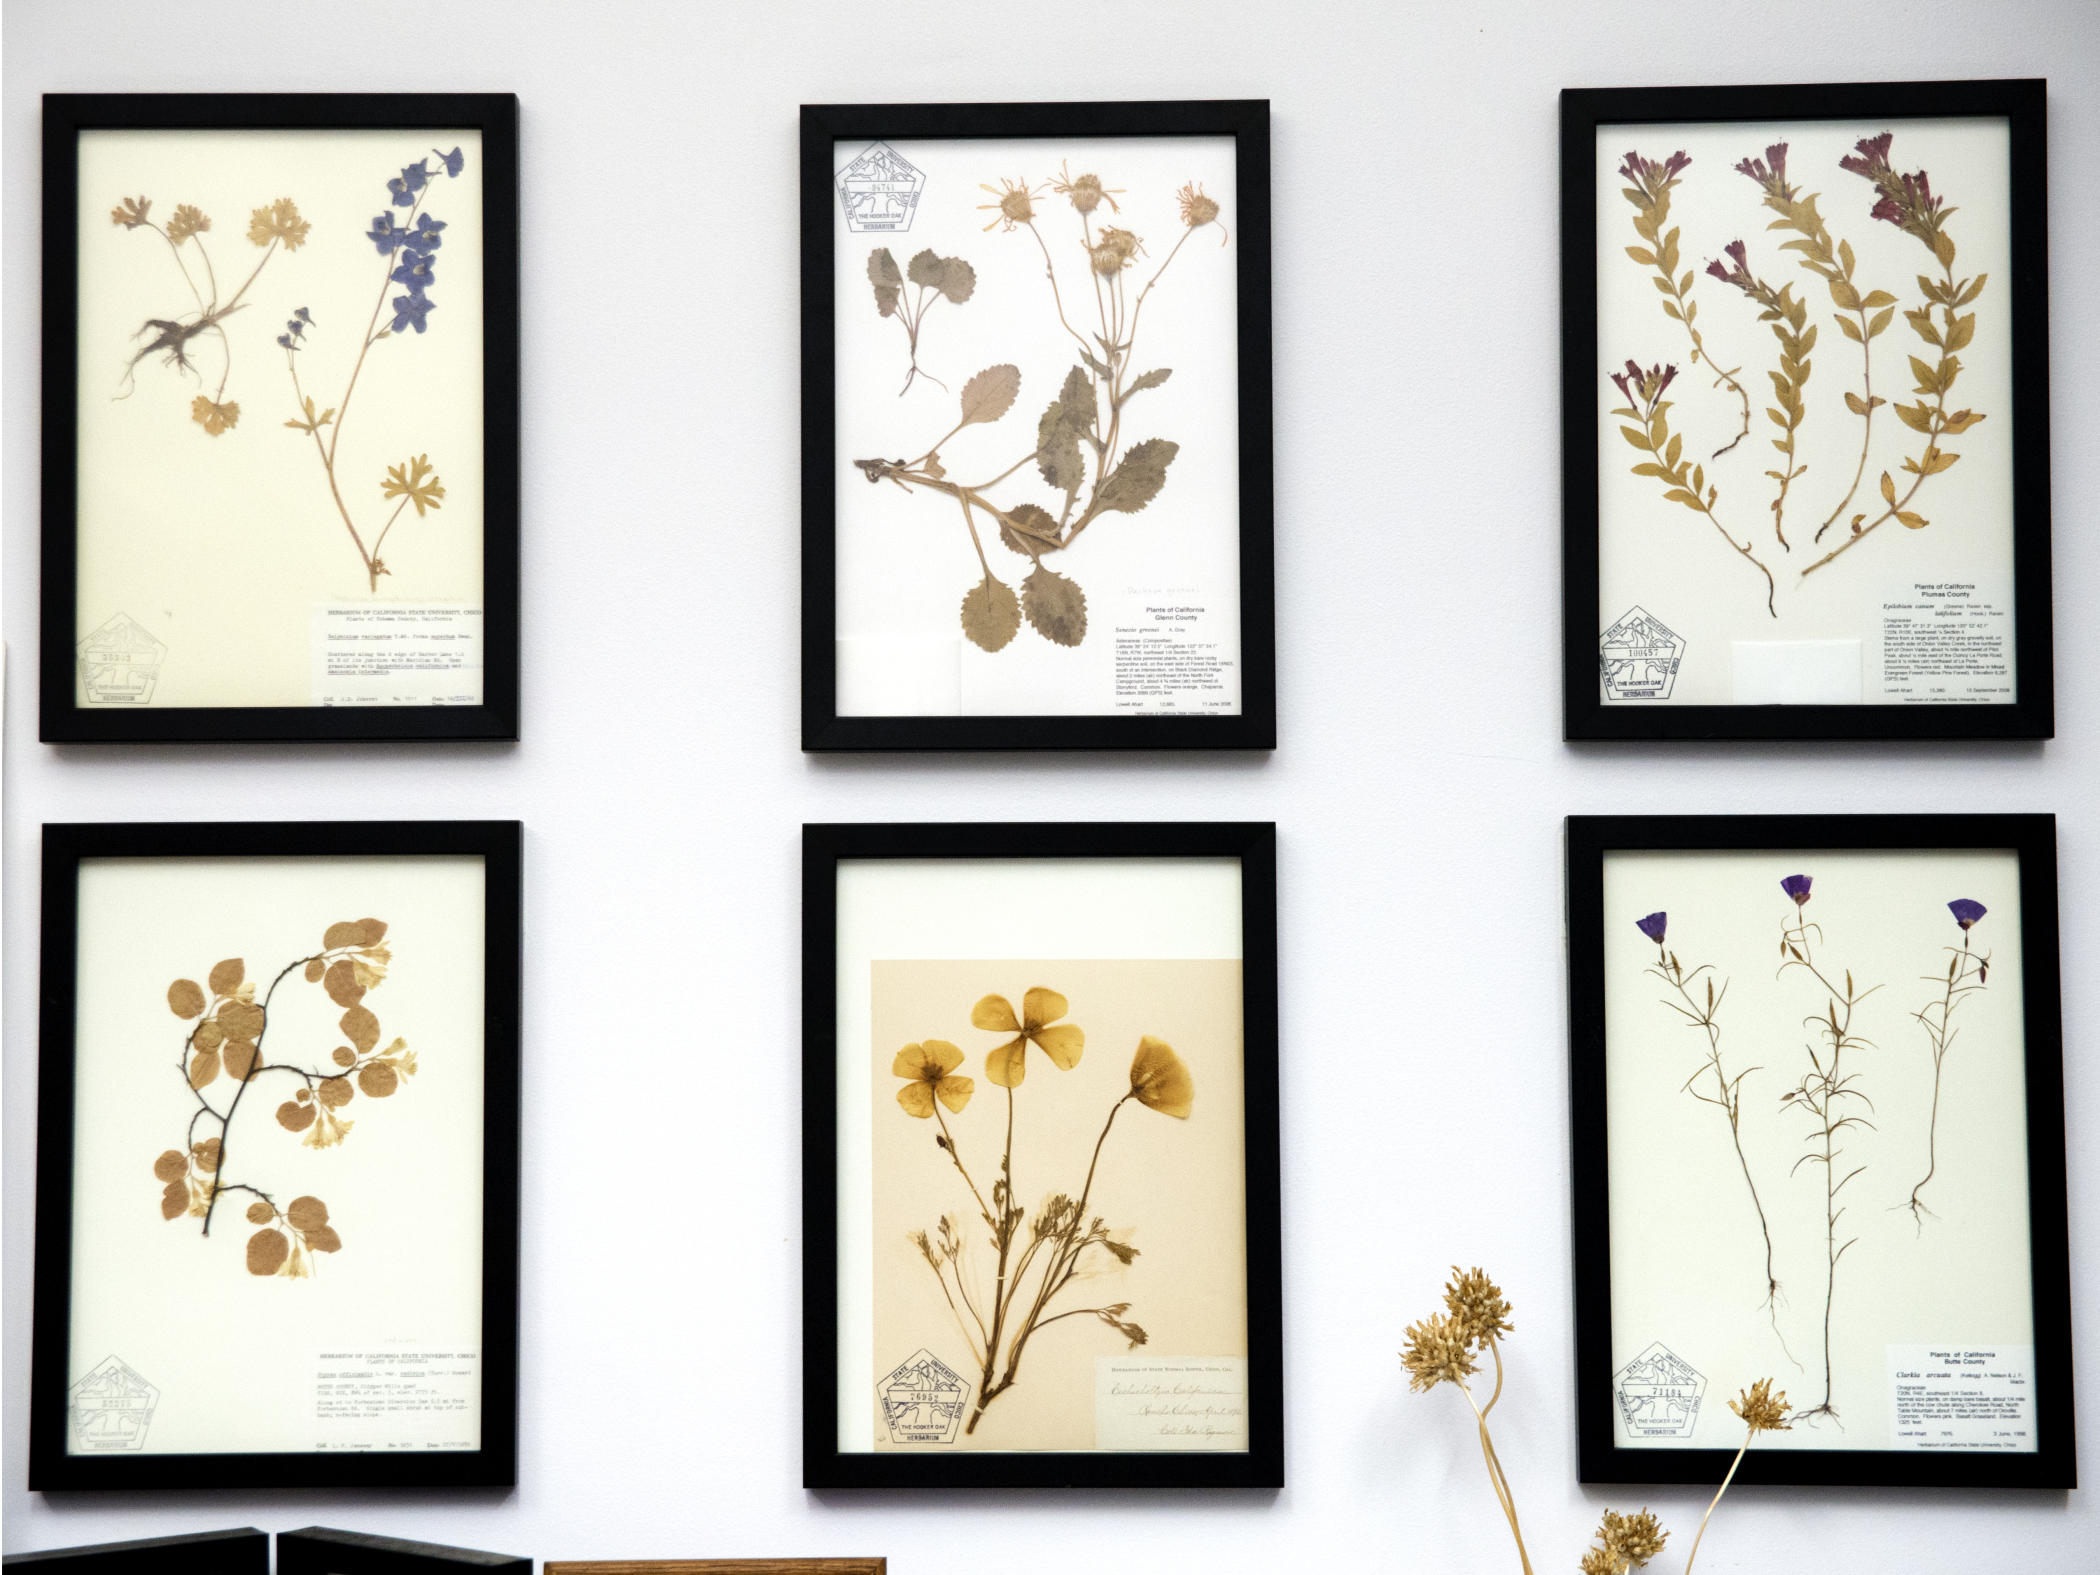 Framed specimens of plants